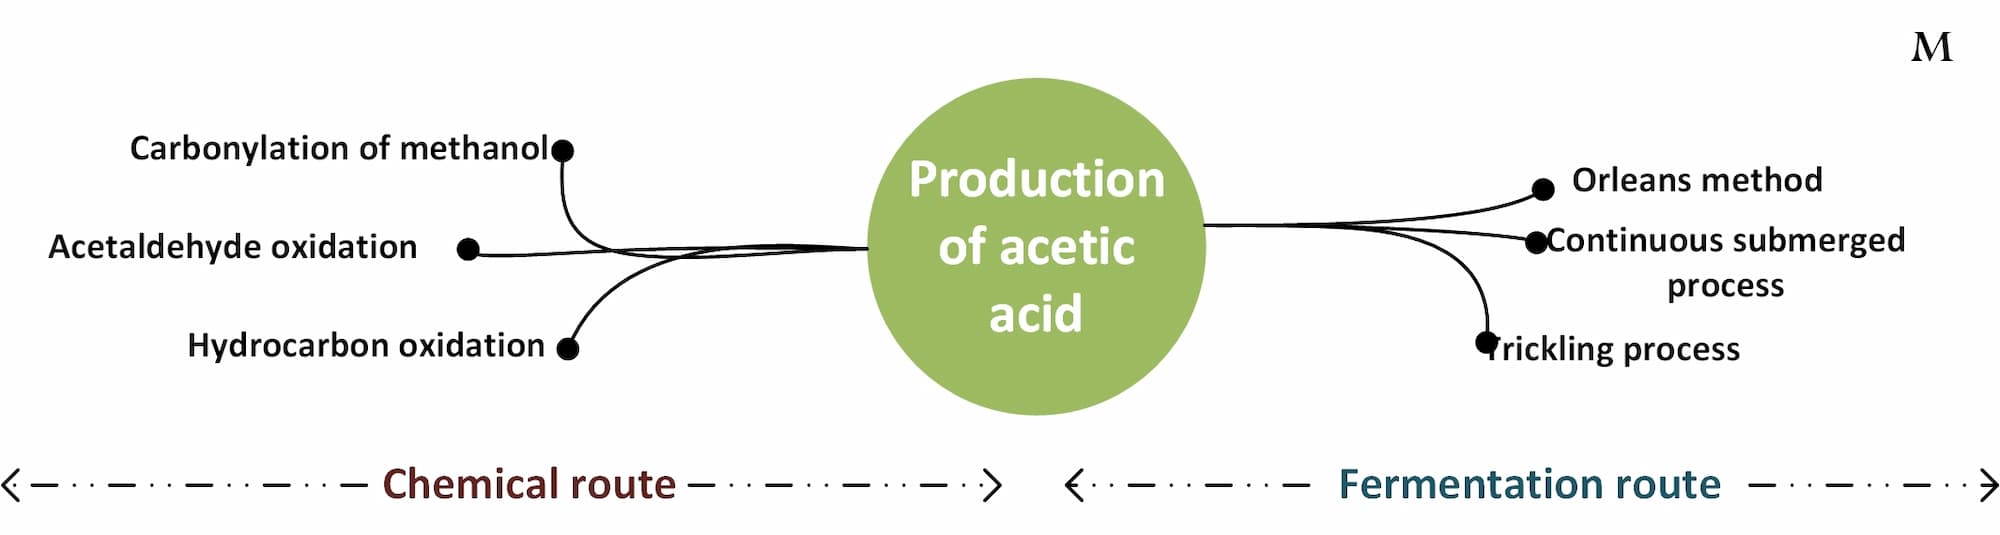 Production of acetic acid